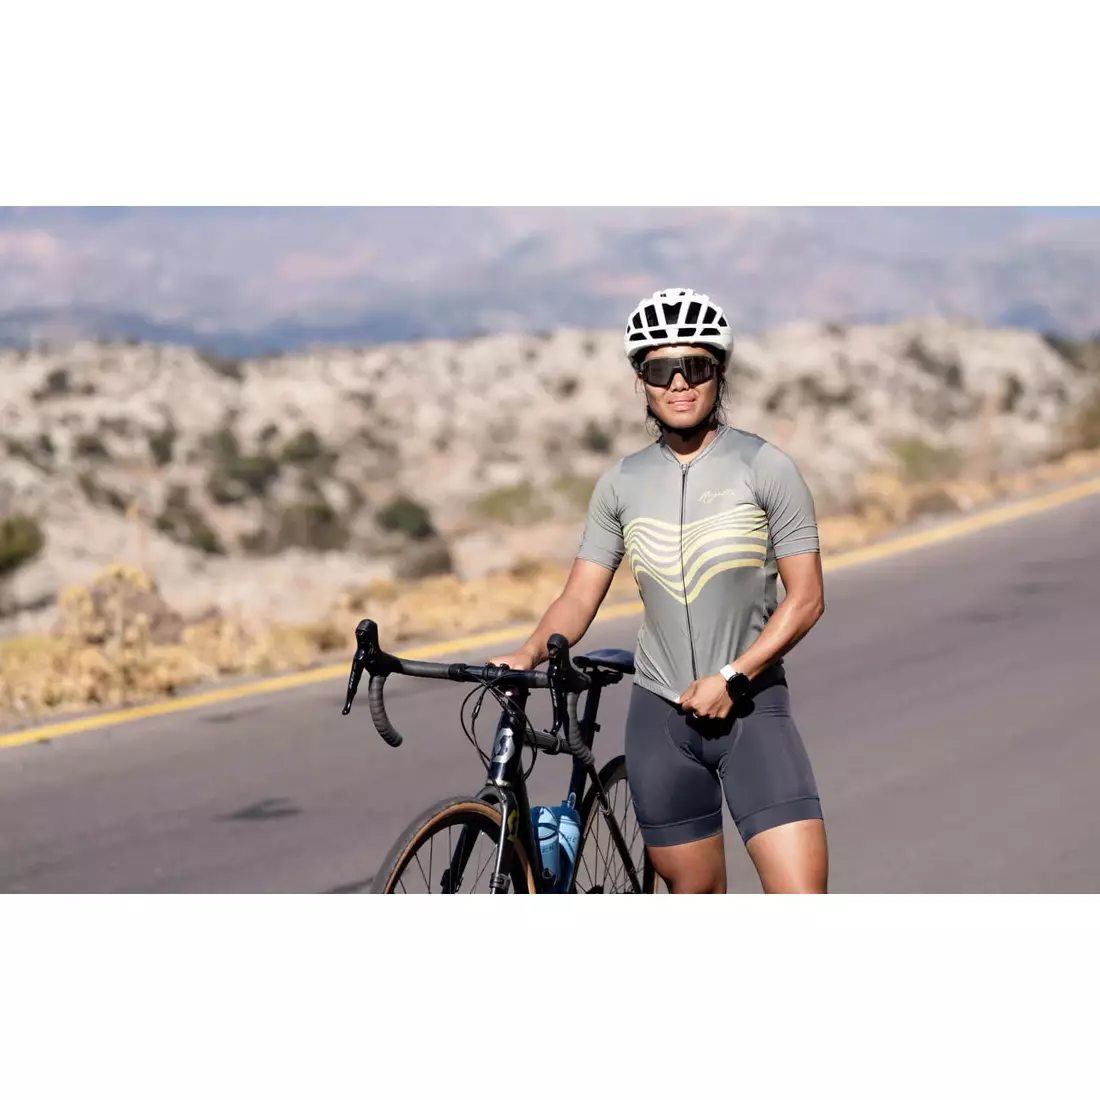 Rogelli DIAGA dámský cyklistický dres, zeleno-zlatá